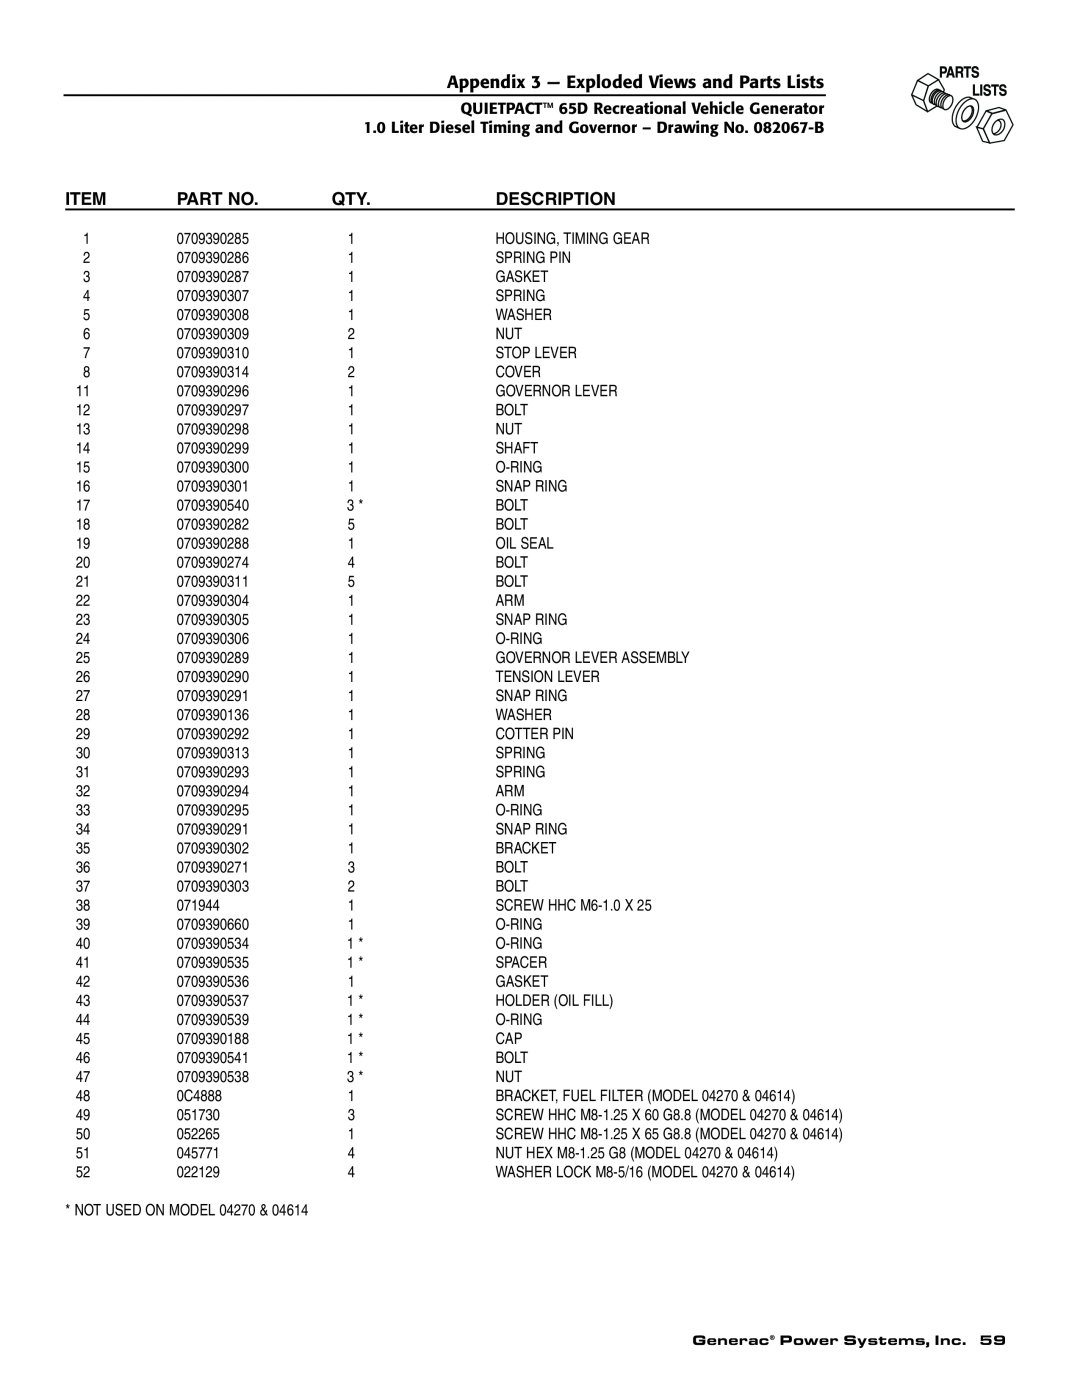 Generac 004614-1 owner manual Appendix 3 - Exploded Views and Parts Lists, Description 